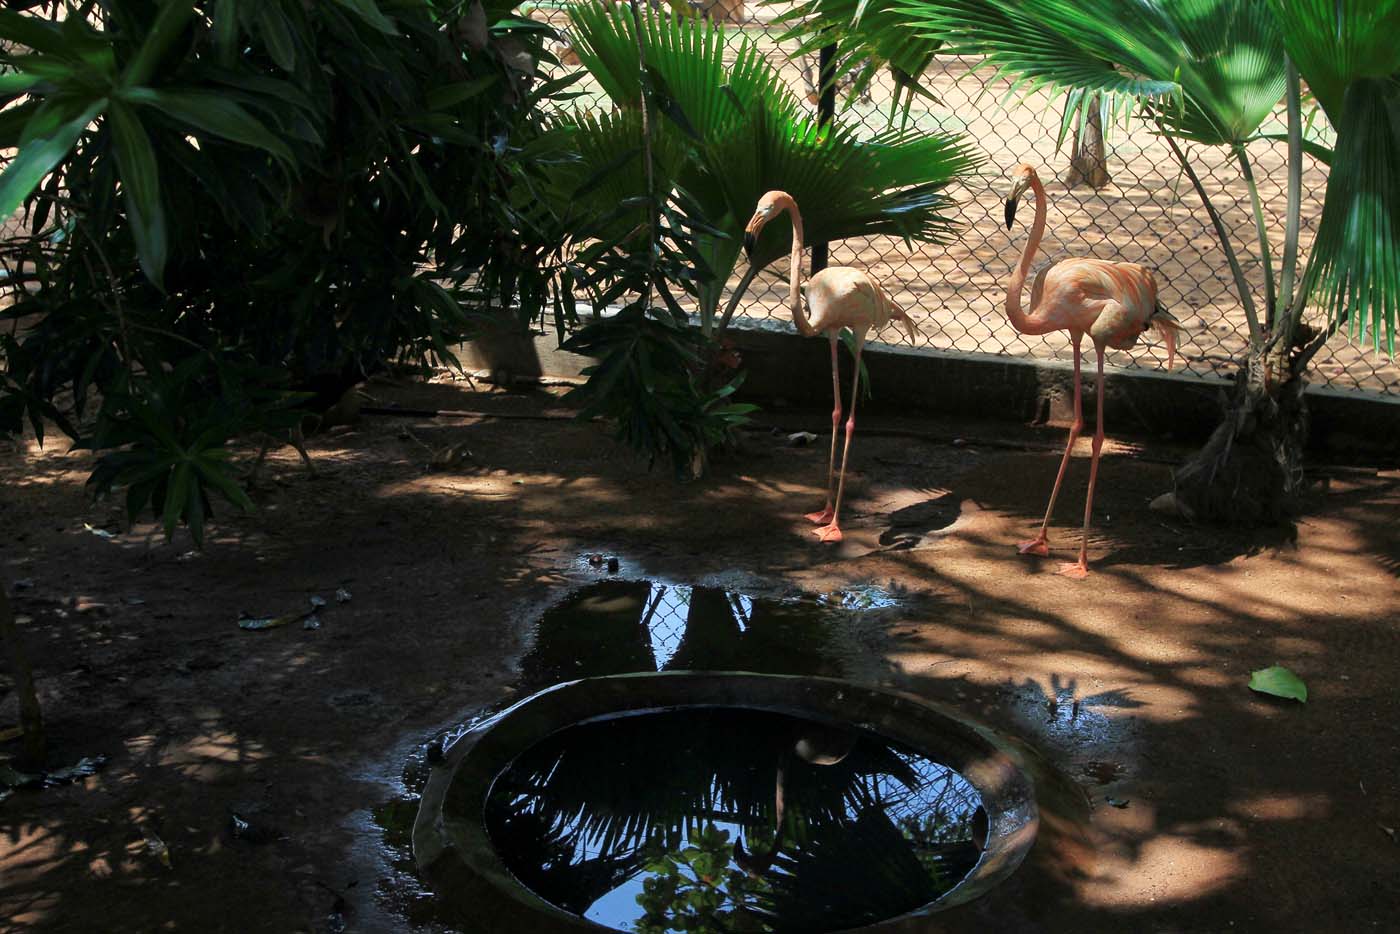 Policía cree que robaron animales de zoológico de Zulia para comérselos